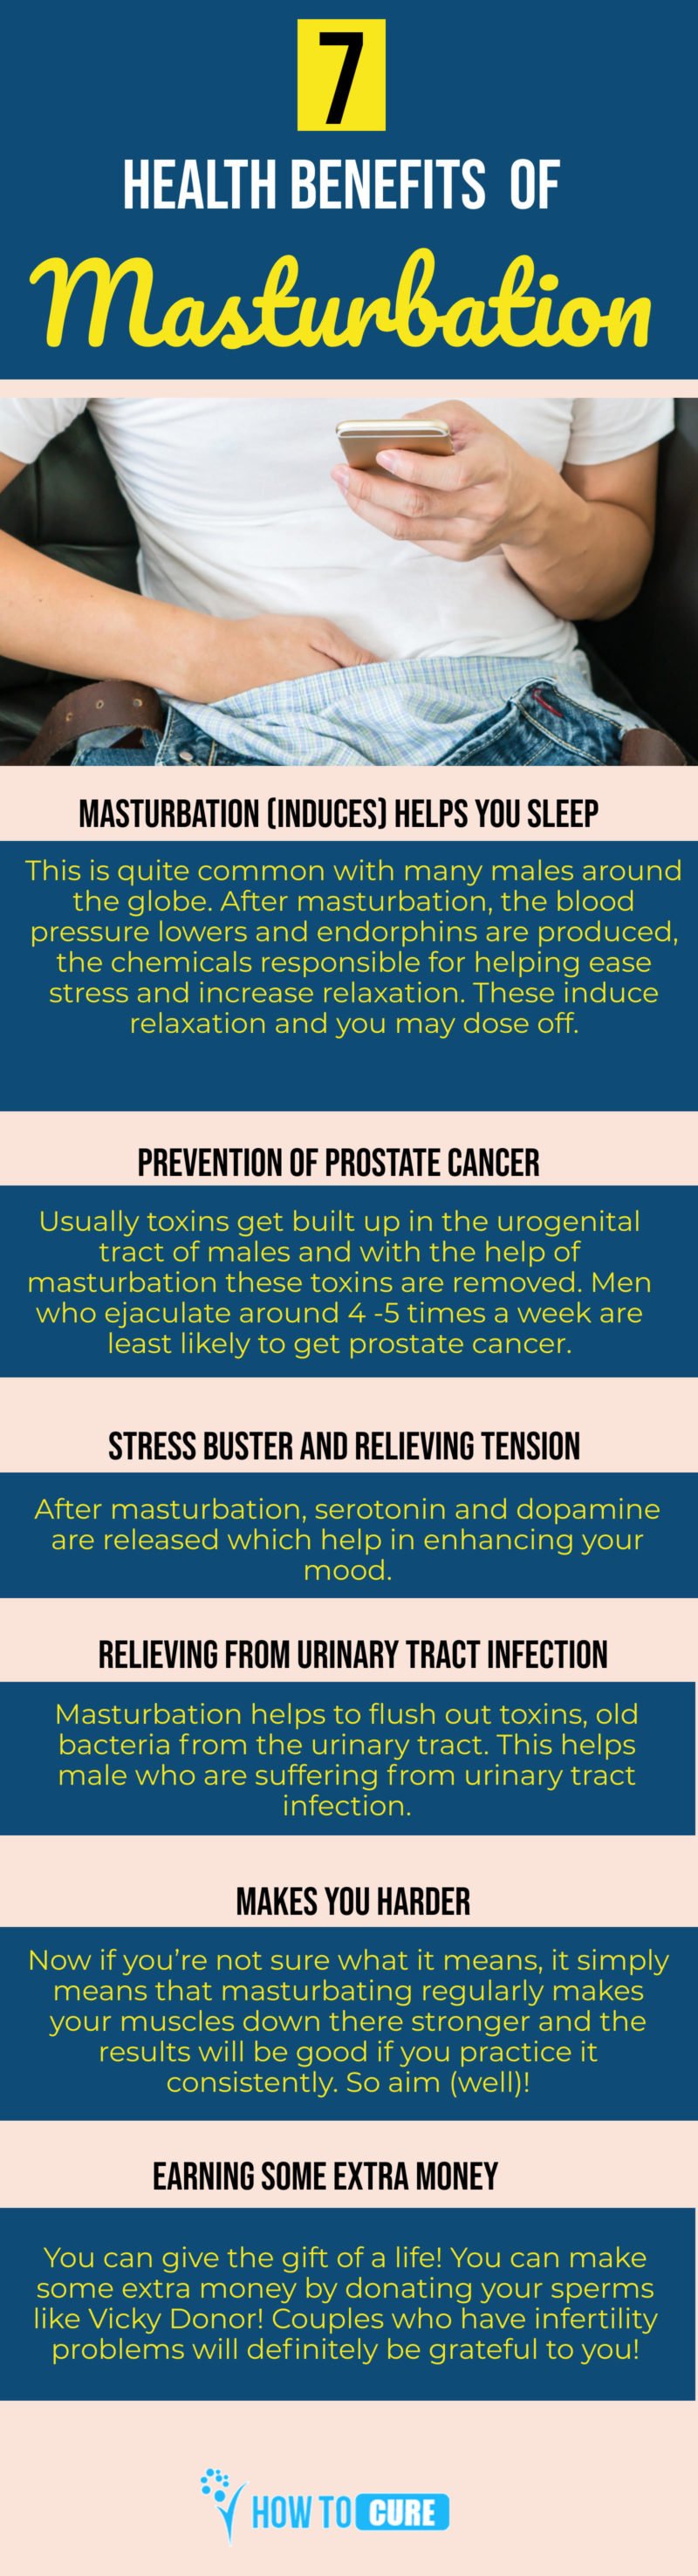 masturbation health benefits